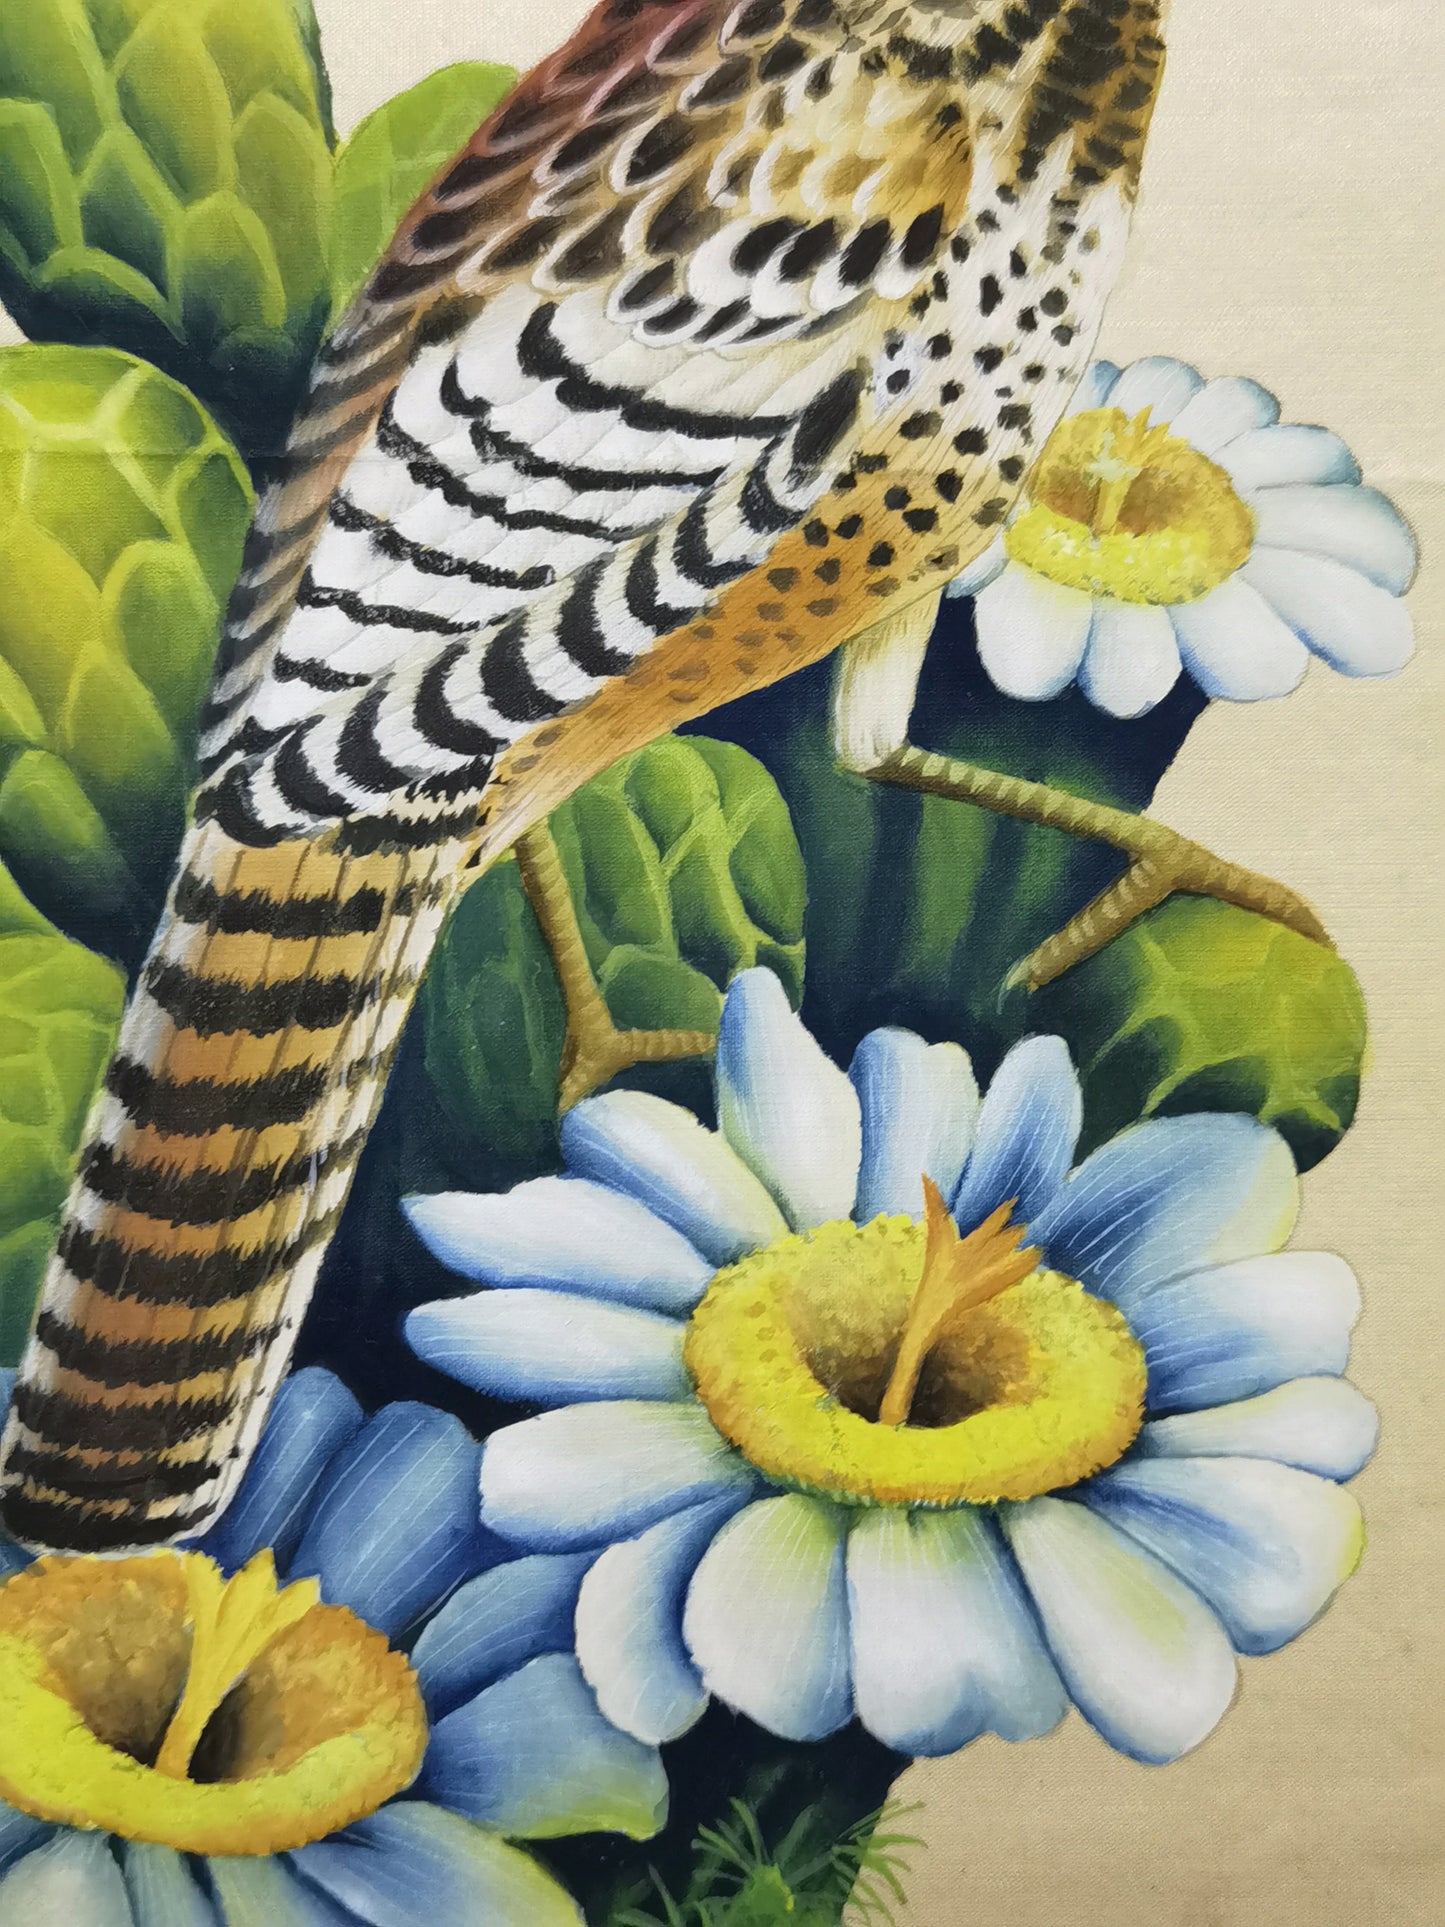 Cactus Wren State Bird Handmade Art Printing Arizona Saguaro Cactus Blossom with Wood Frame